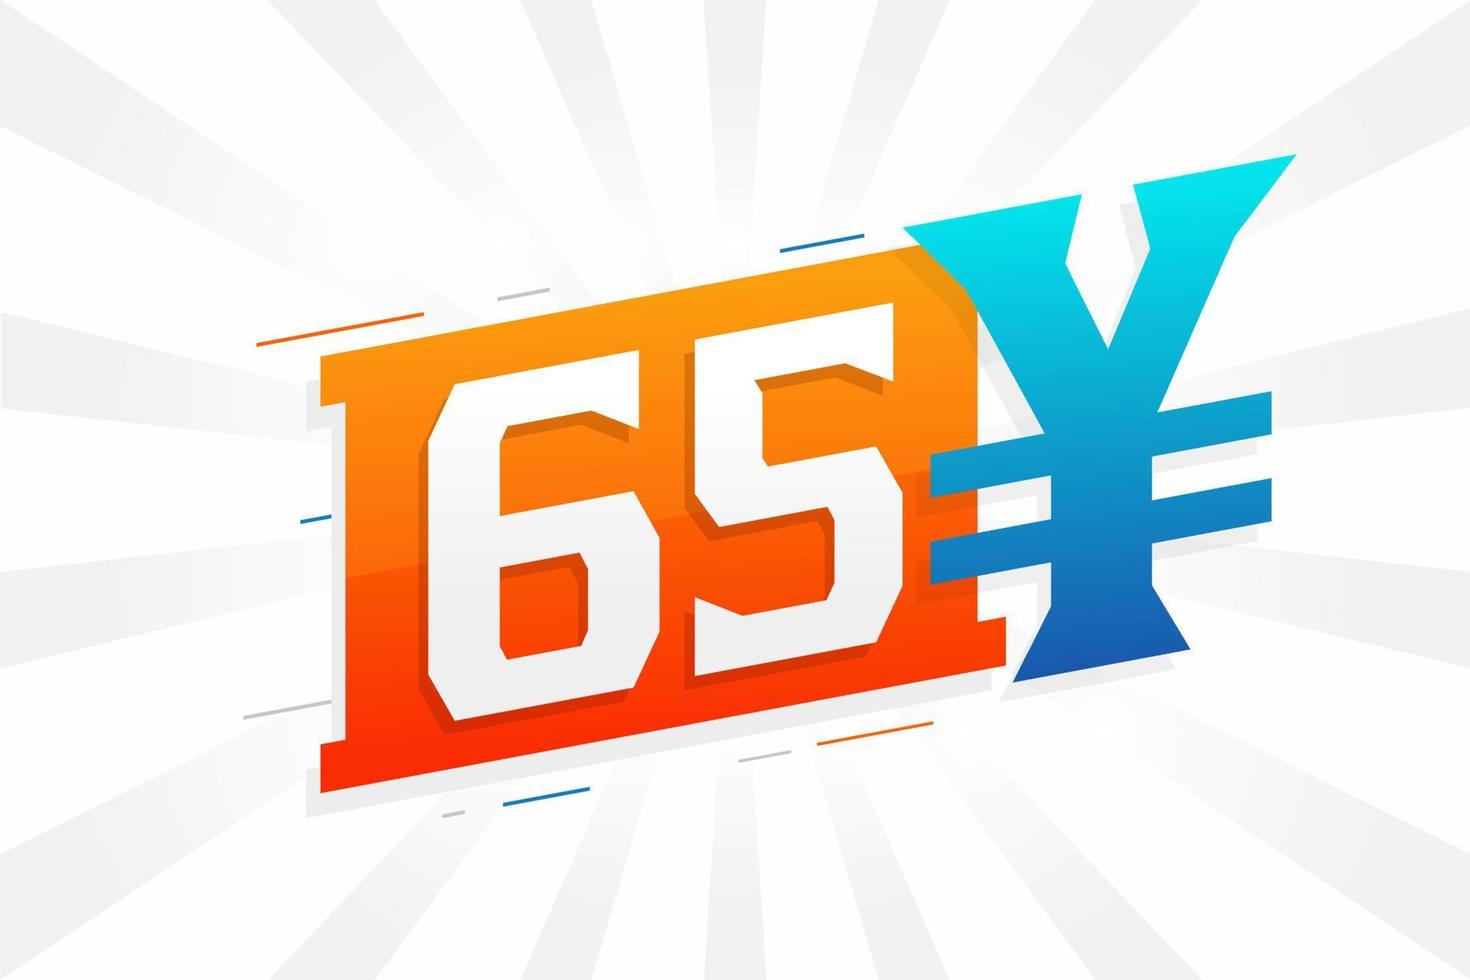 65 yuan Cinese moneta vettore testo simbolo. 65 yen giapponese moneta i soldi azione vettore